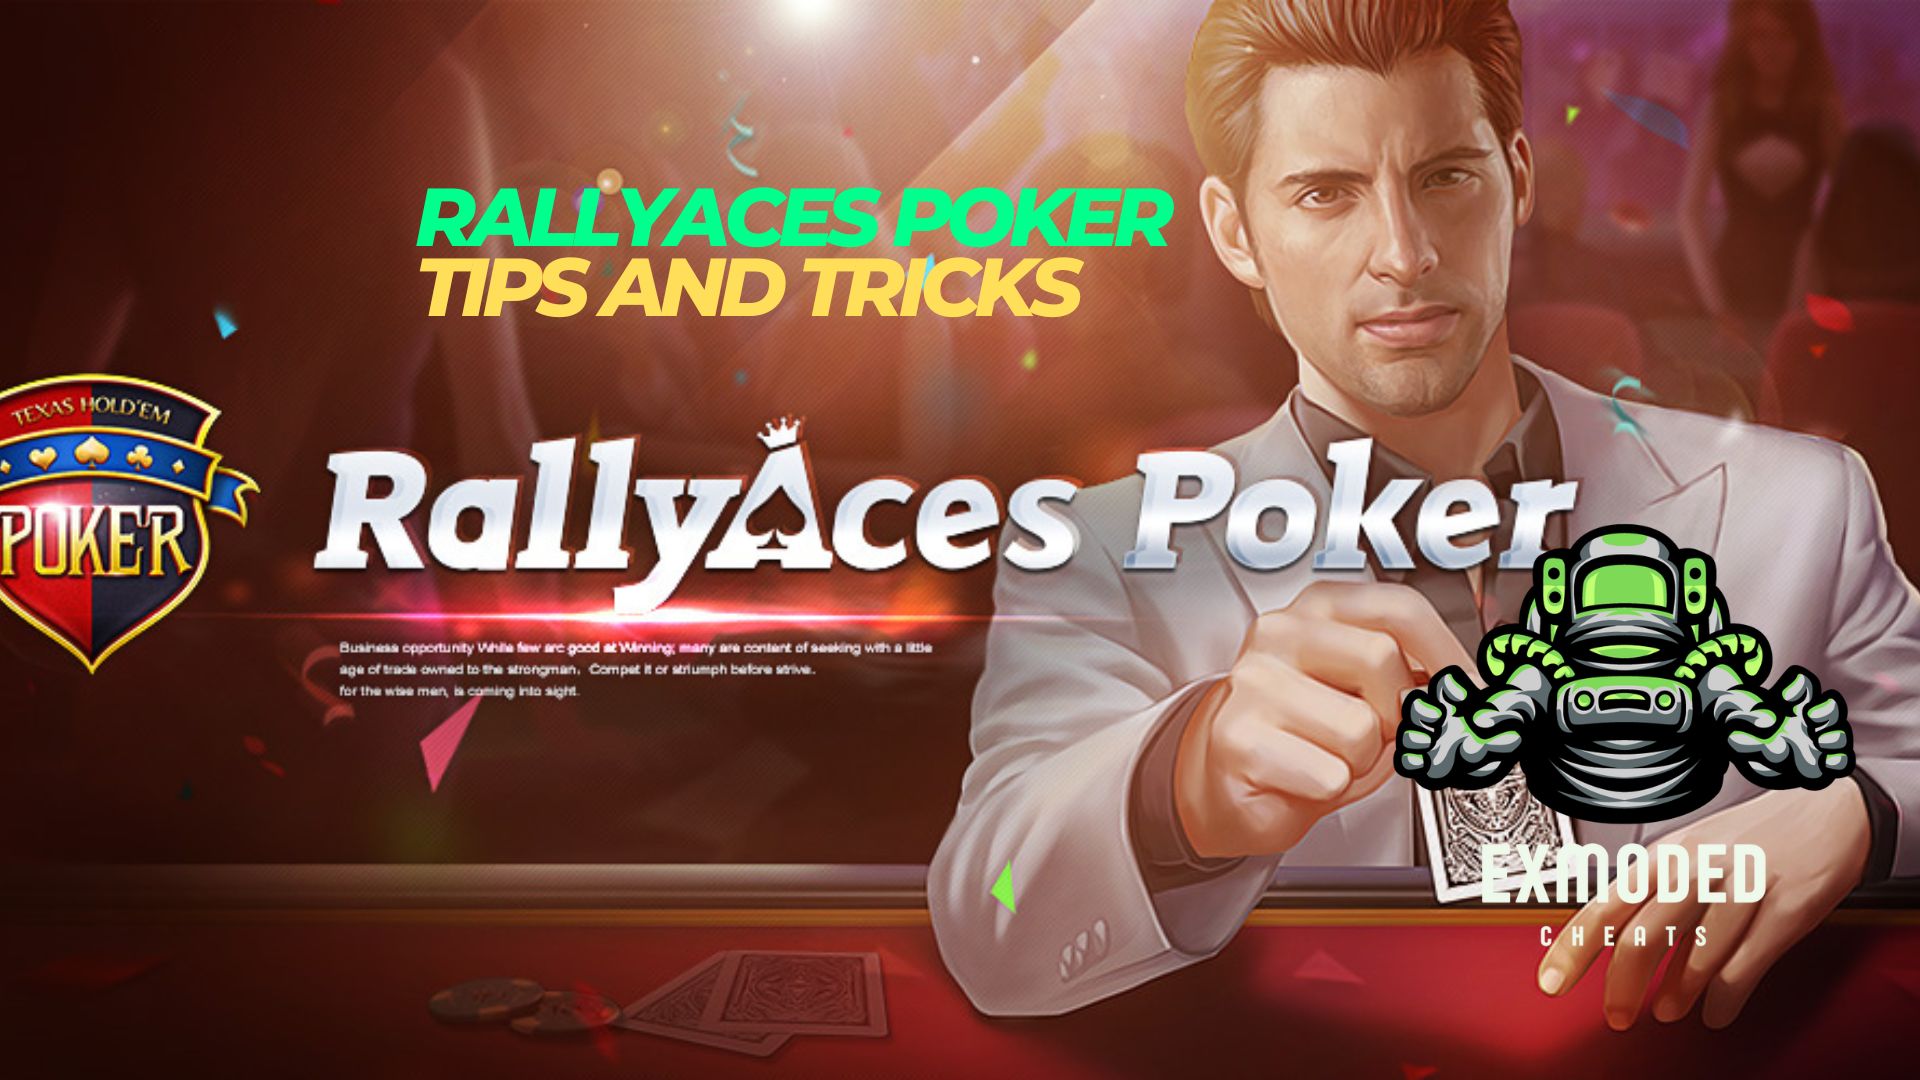 Rallyaces Poker tips and tricks